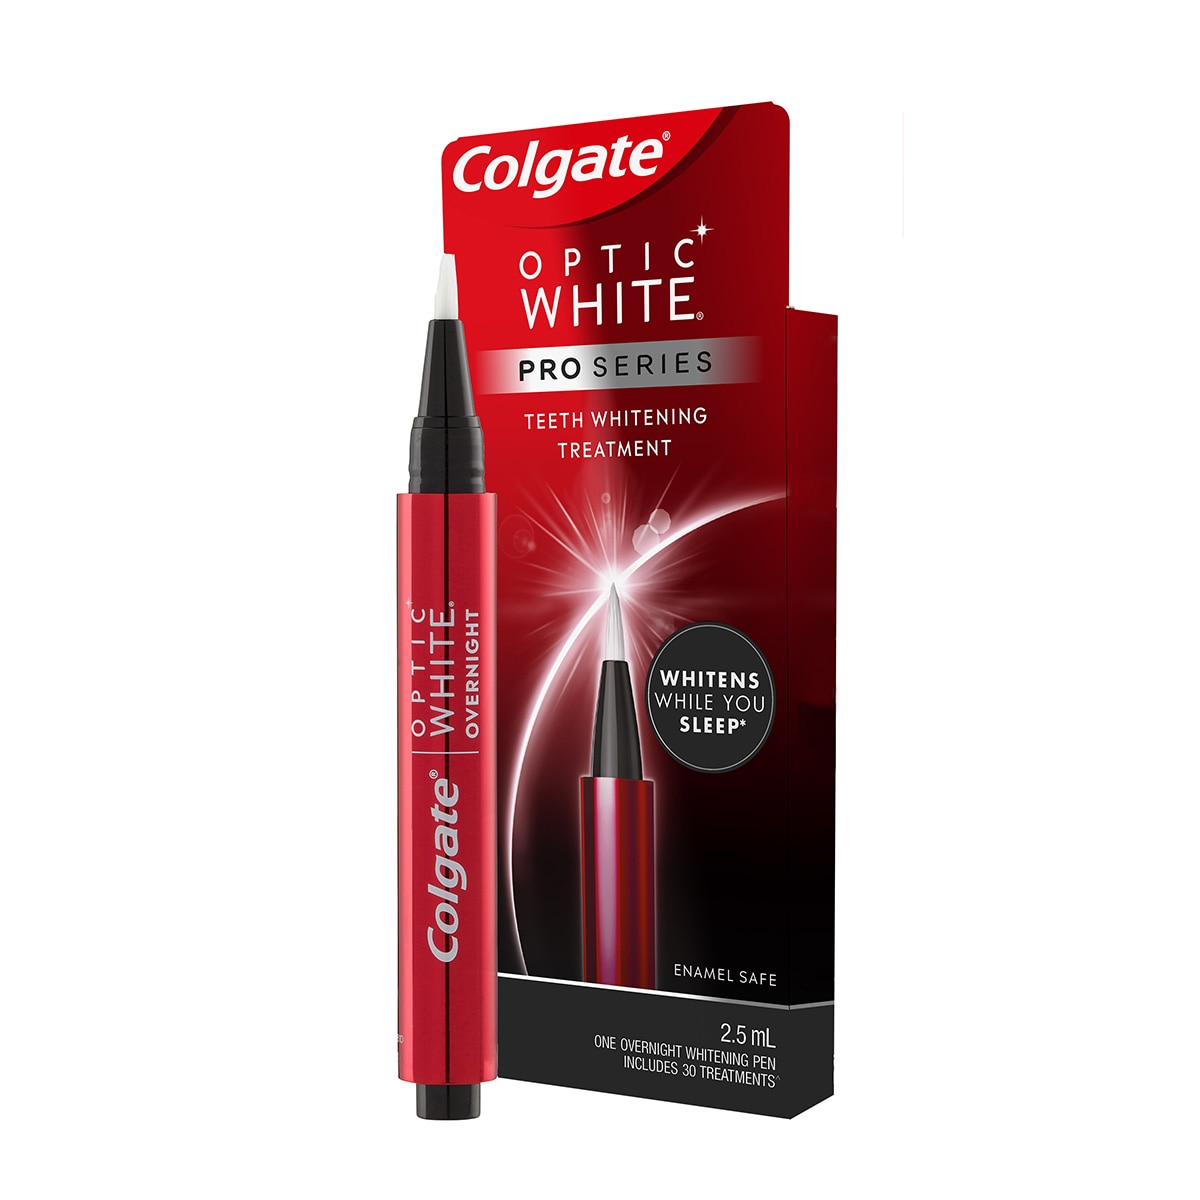 Colgate Optic White teeth whitening pen